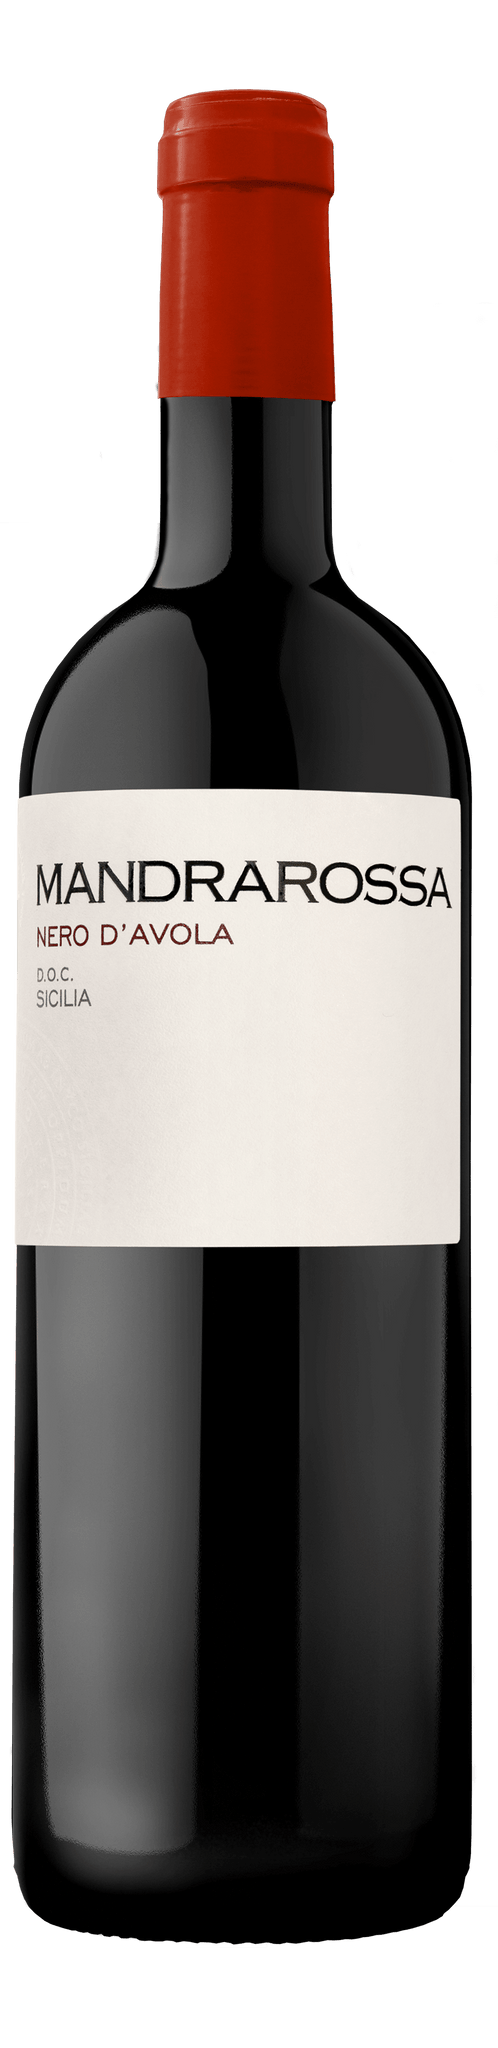 2015 Mandrarossa Nero D'Avola